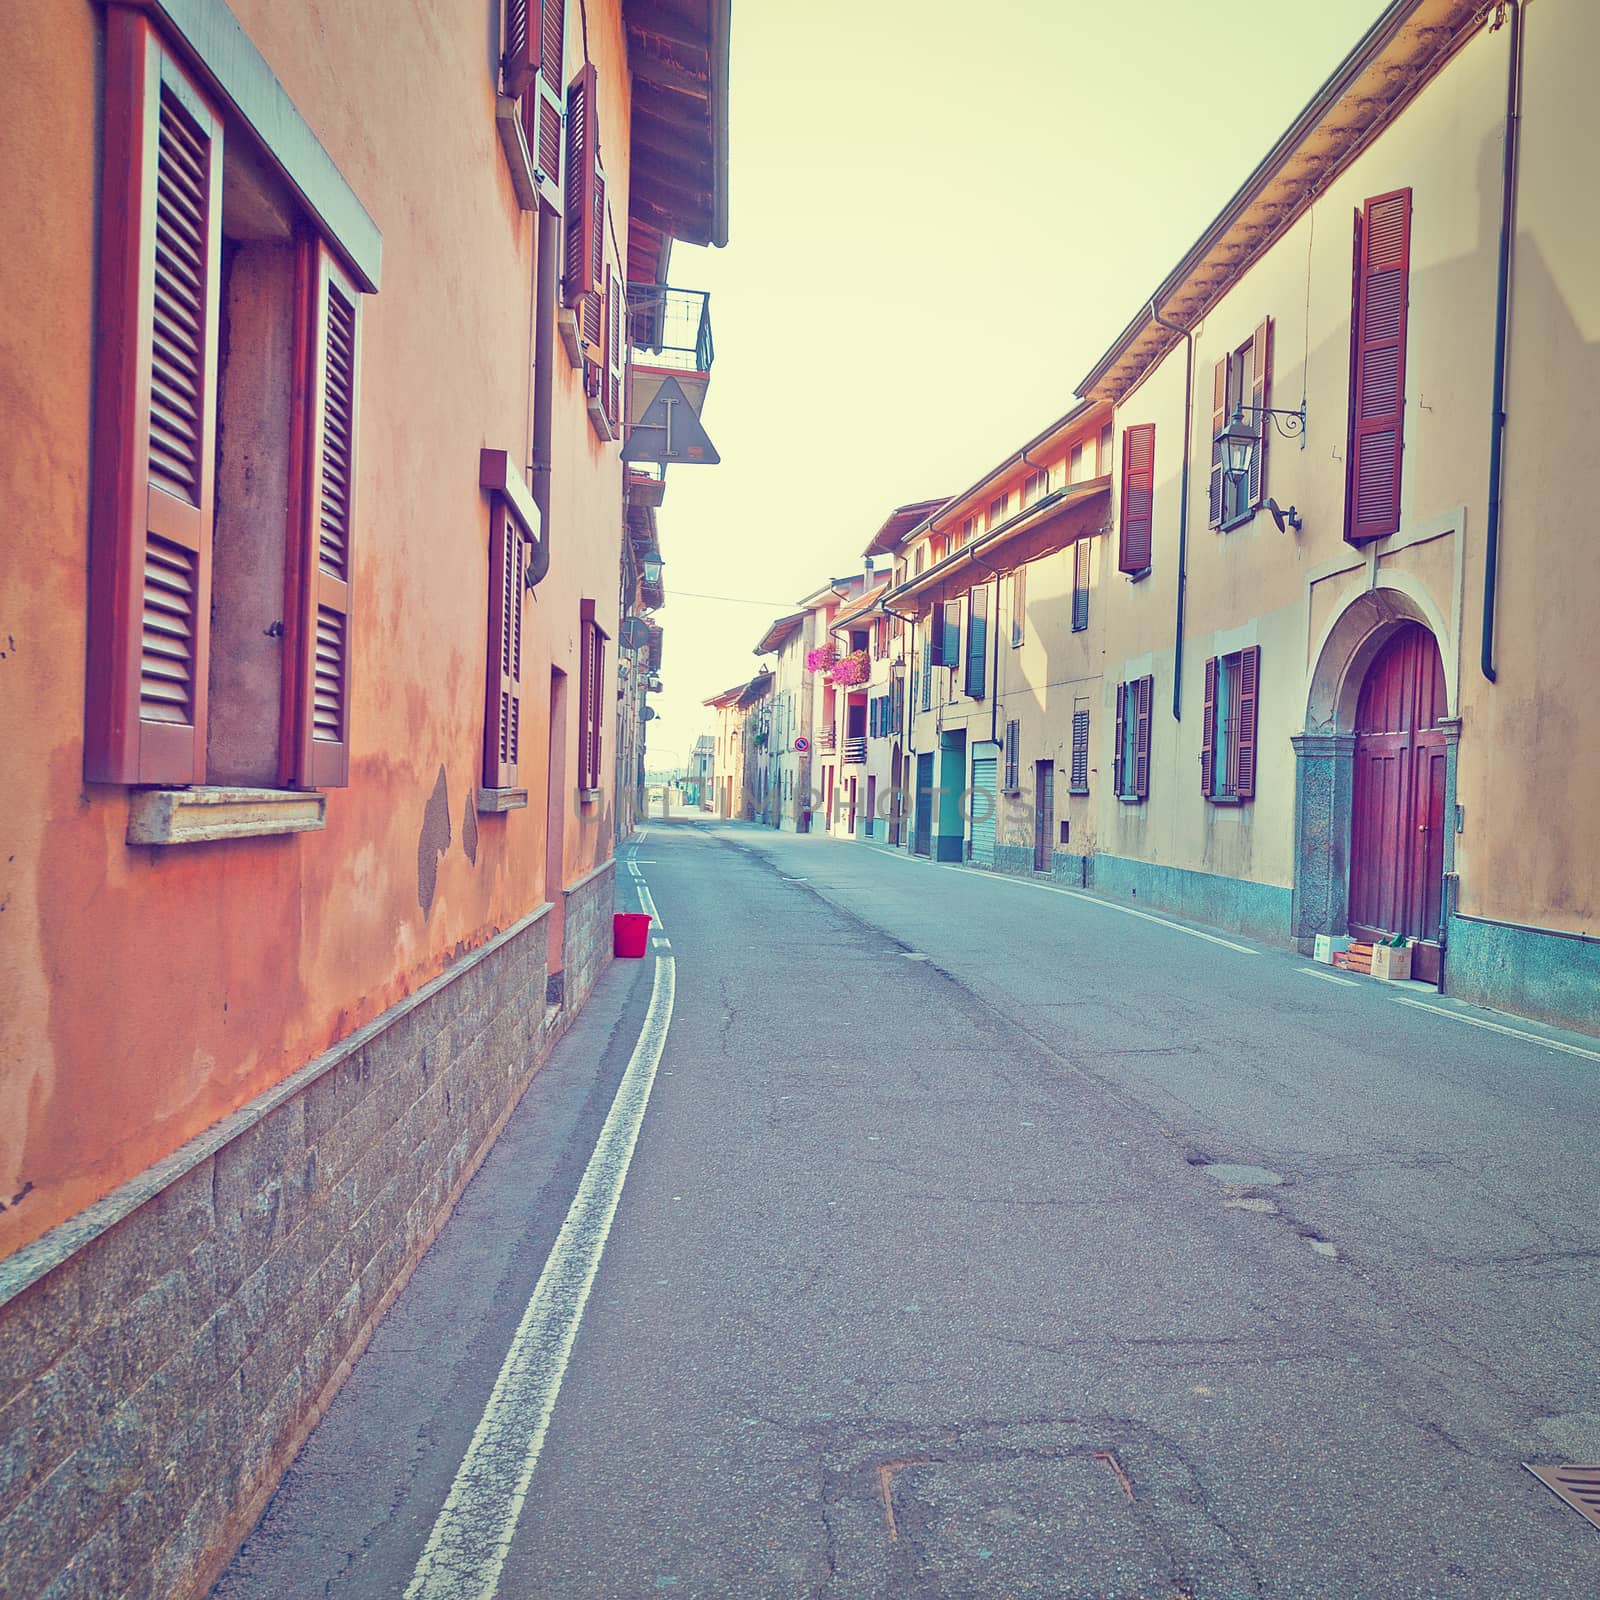 Narrow Street with Old Buildings in Italian City in Piedmont, Instagram Effect